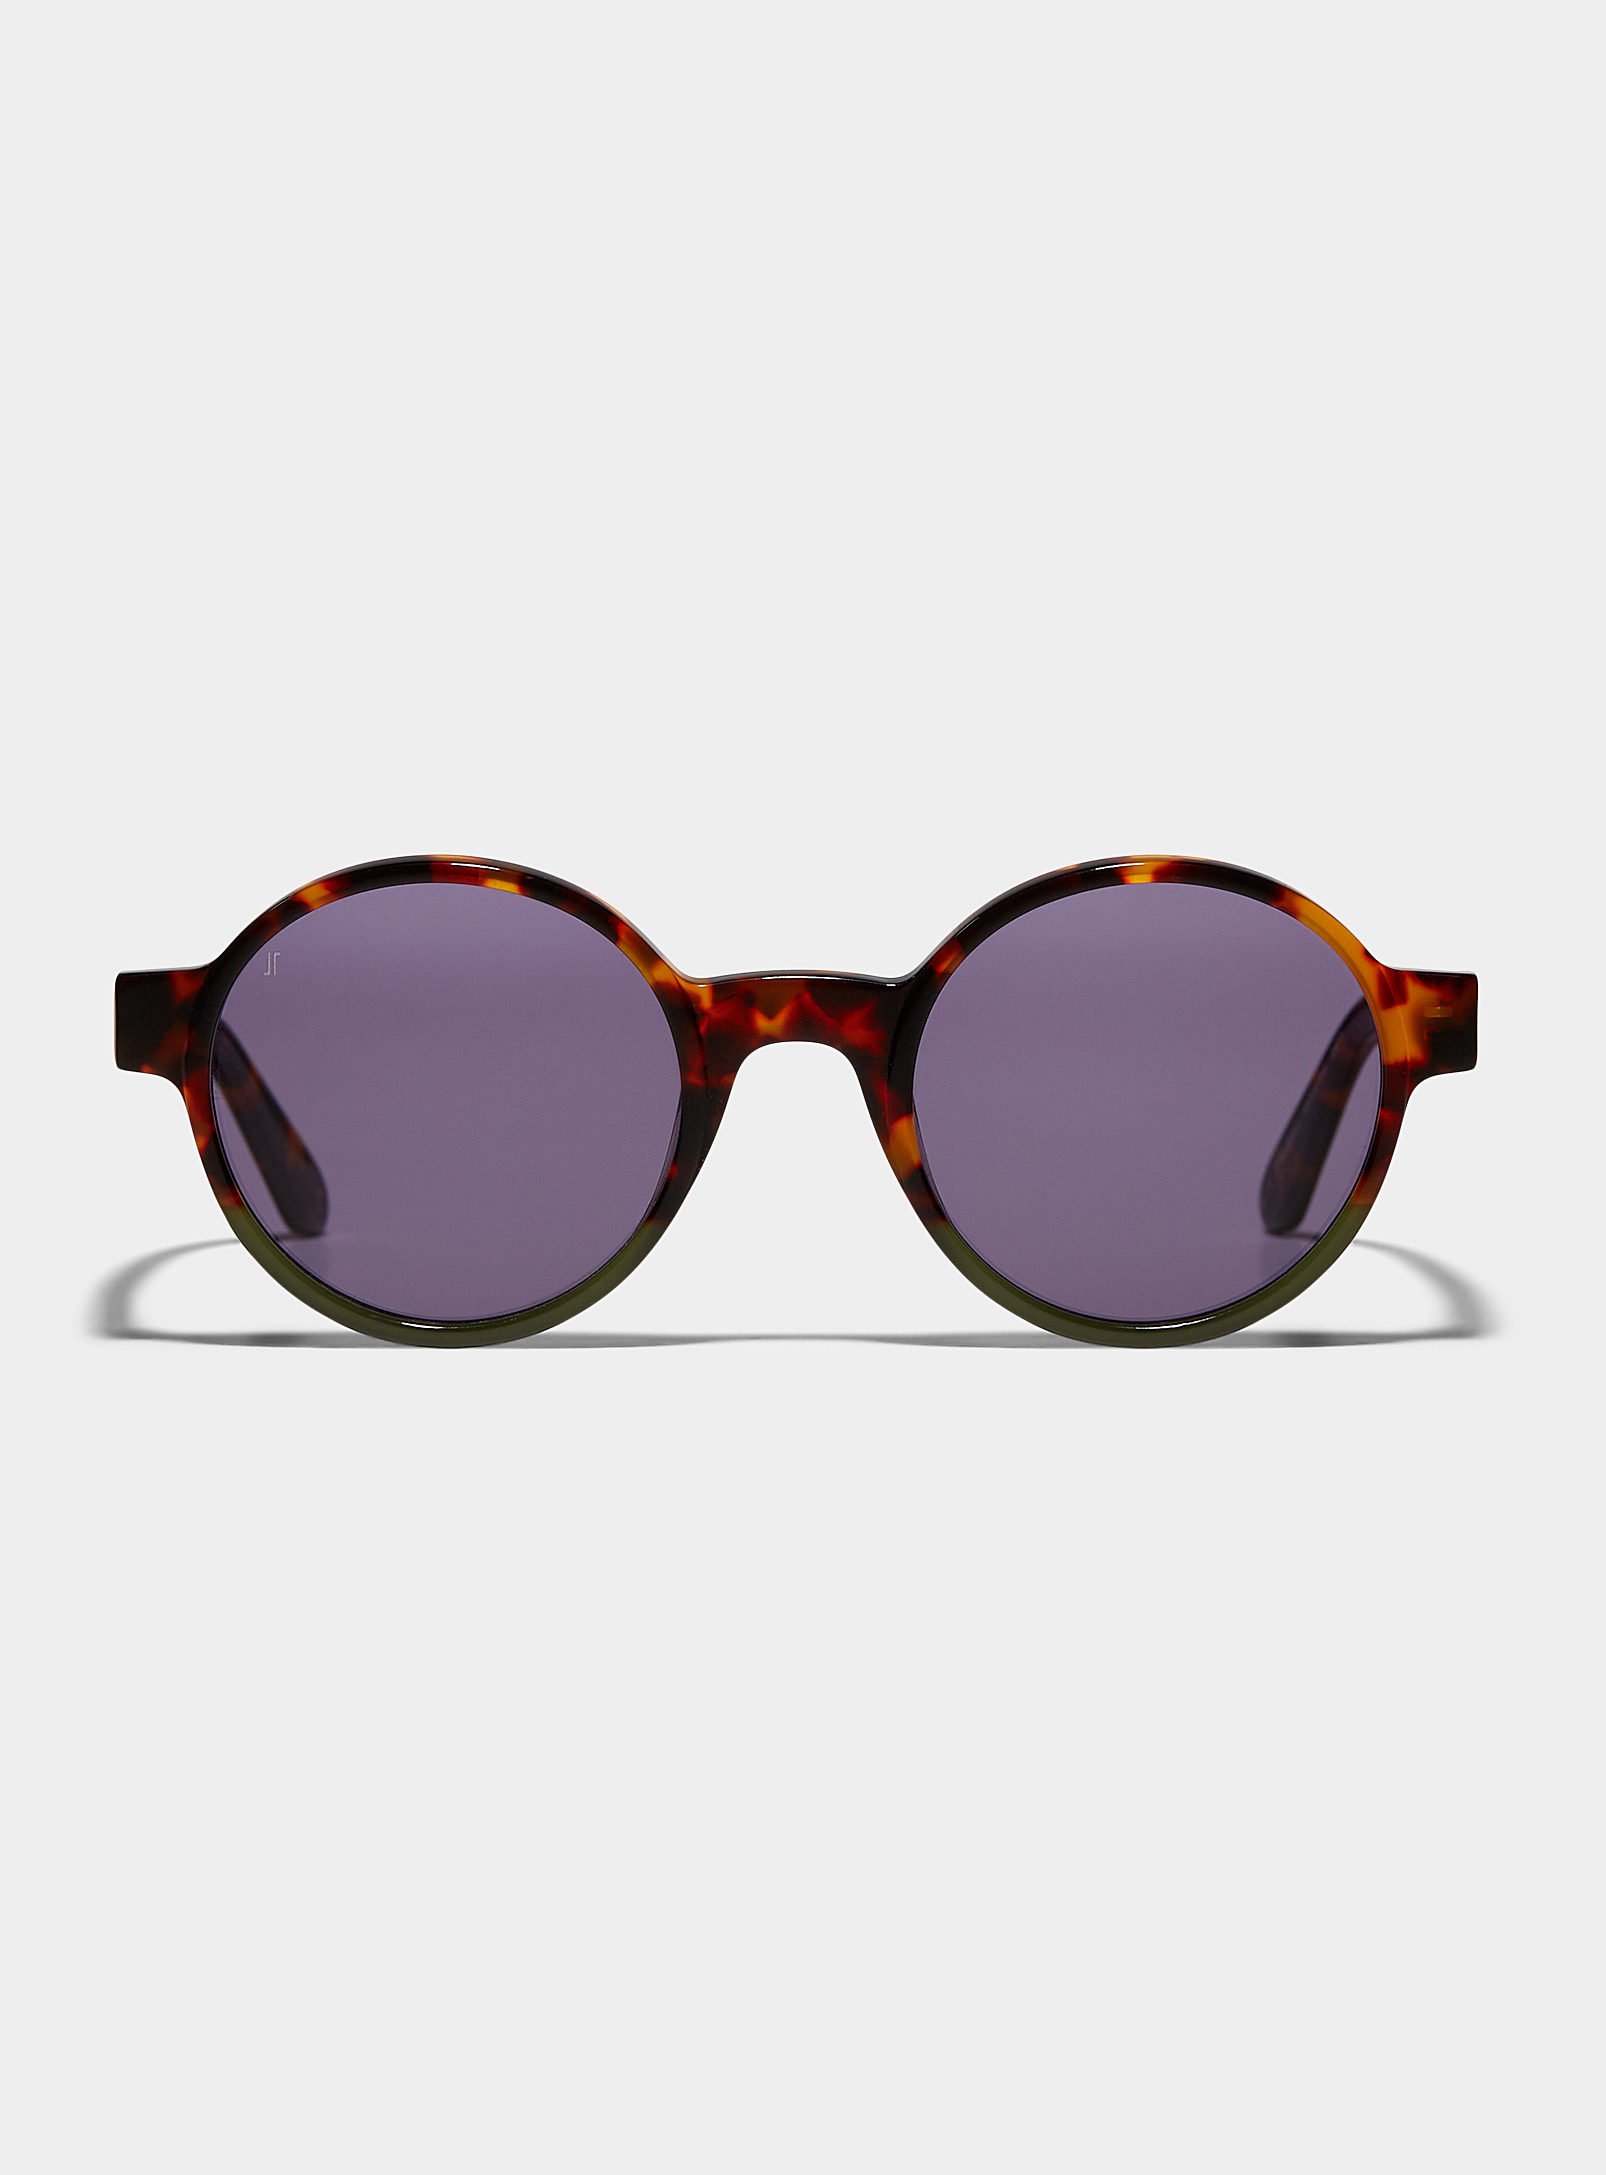 Jimmy Fairly - Women's Gadjo round sunglasses